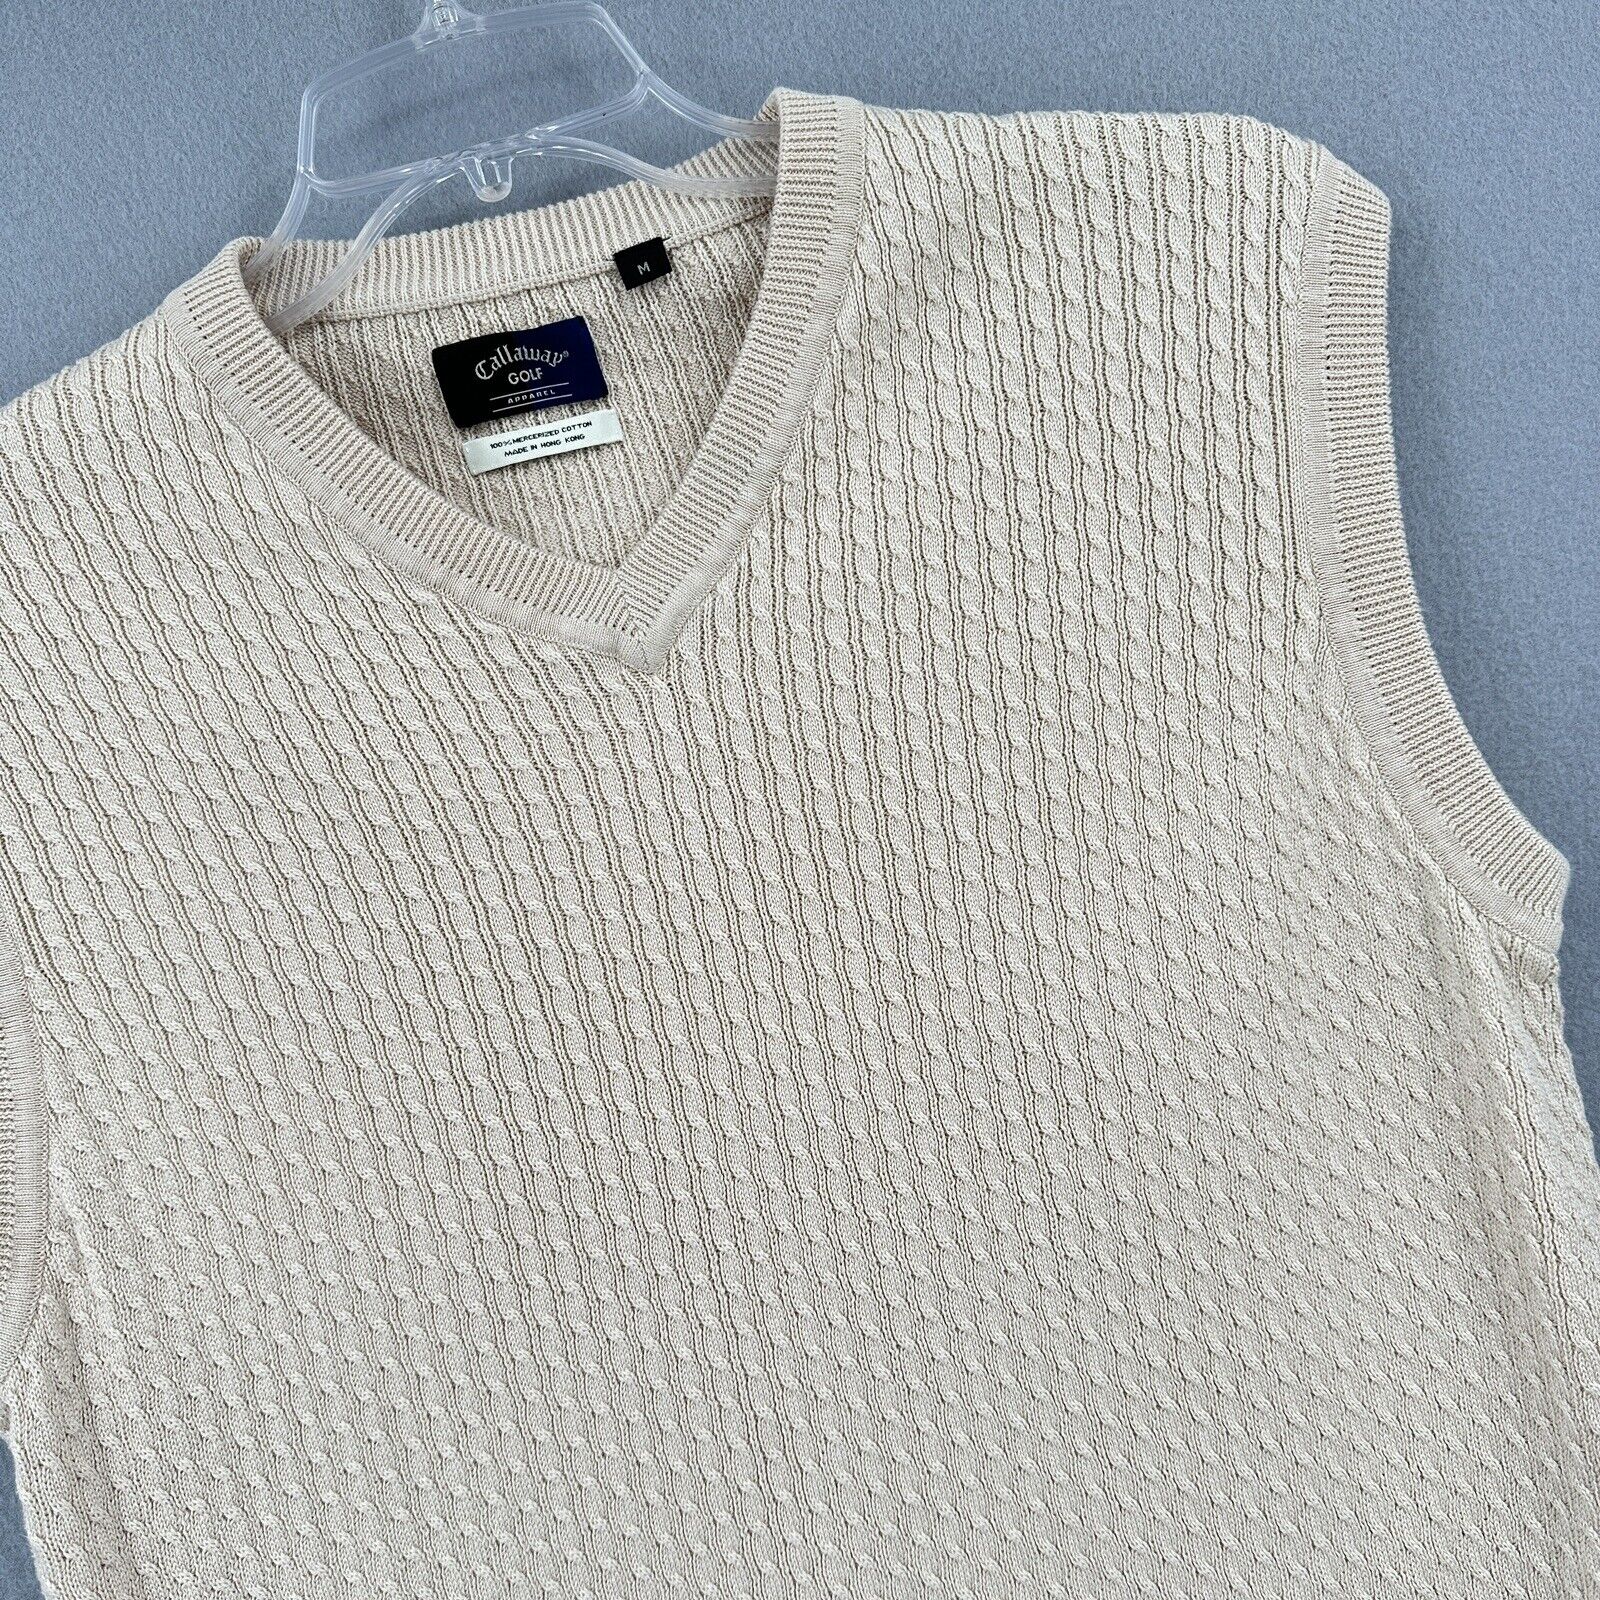 Callaway Golf Apparel Sweater Vest Outerwear Mens Medium V-Neck Oat Knit Cotton